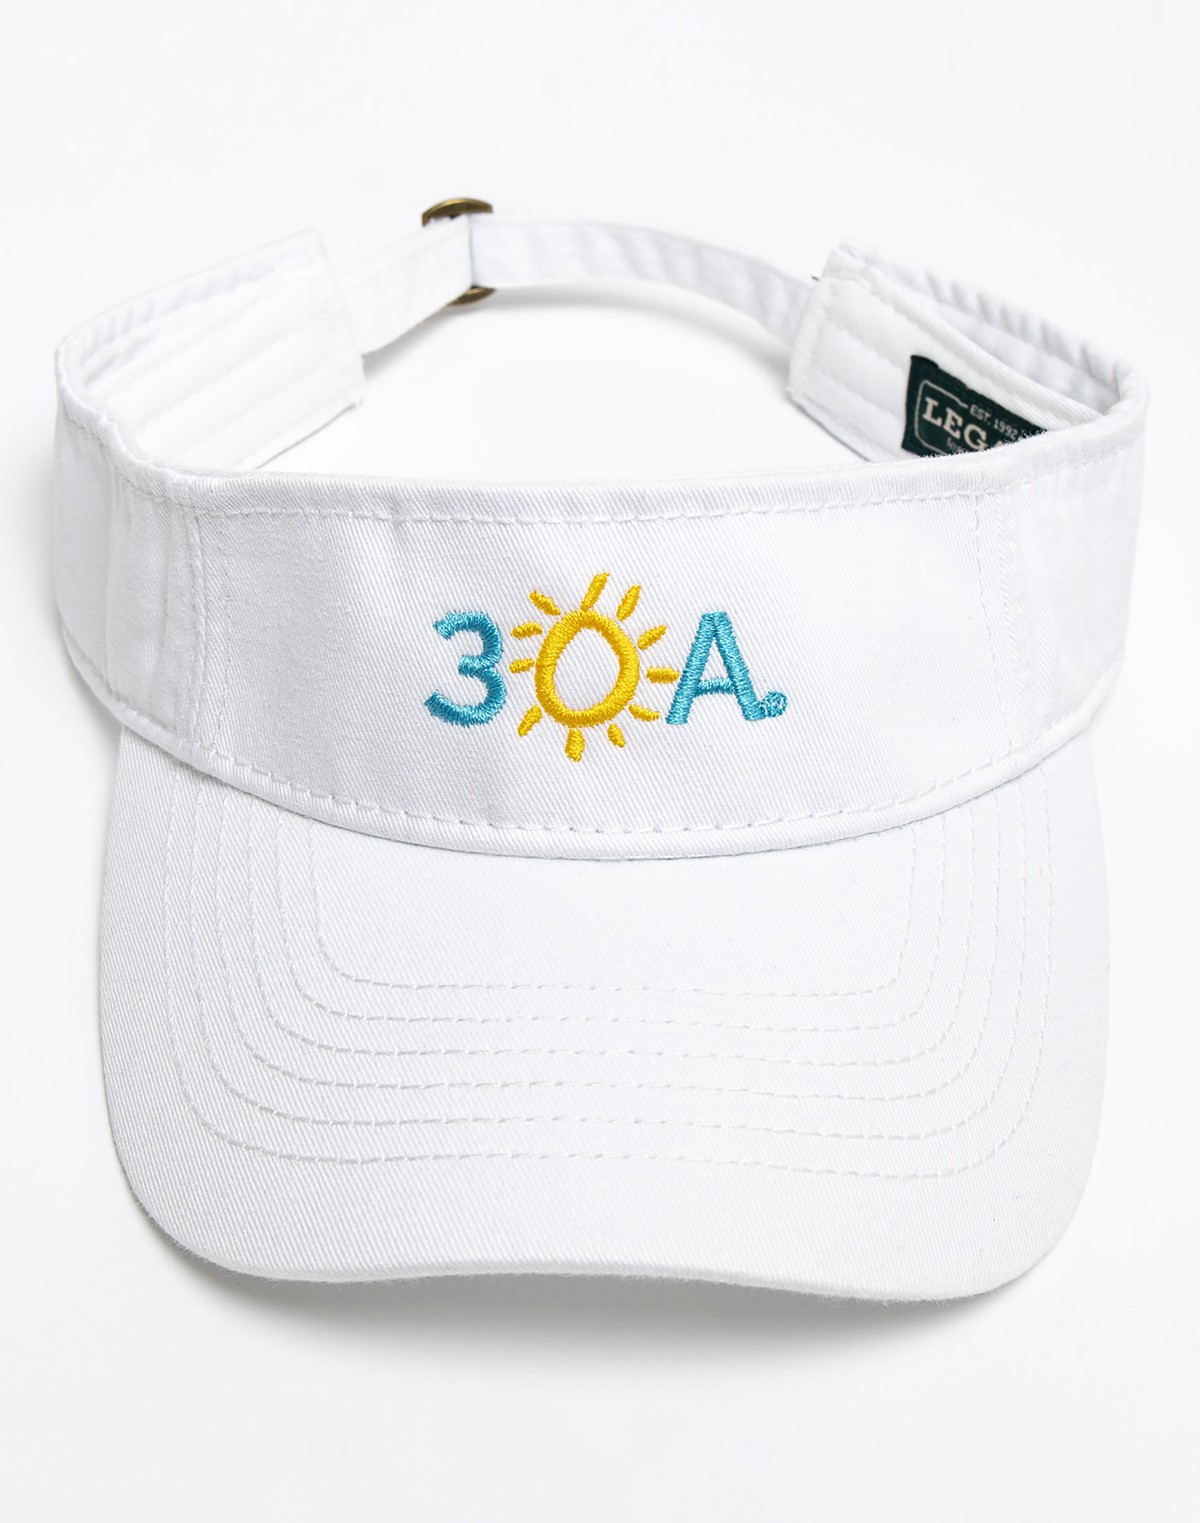 30A® Visor - White item